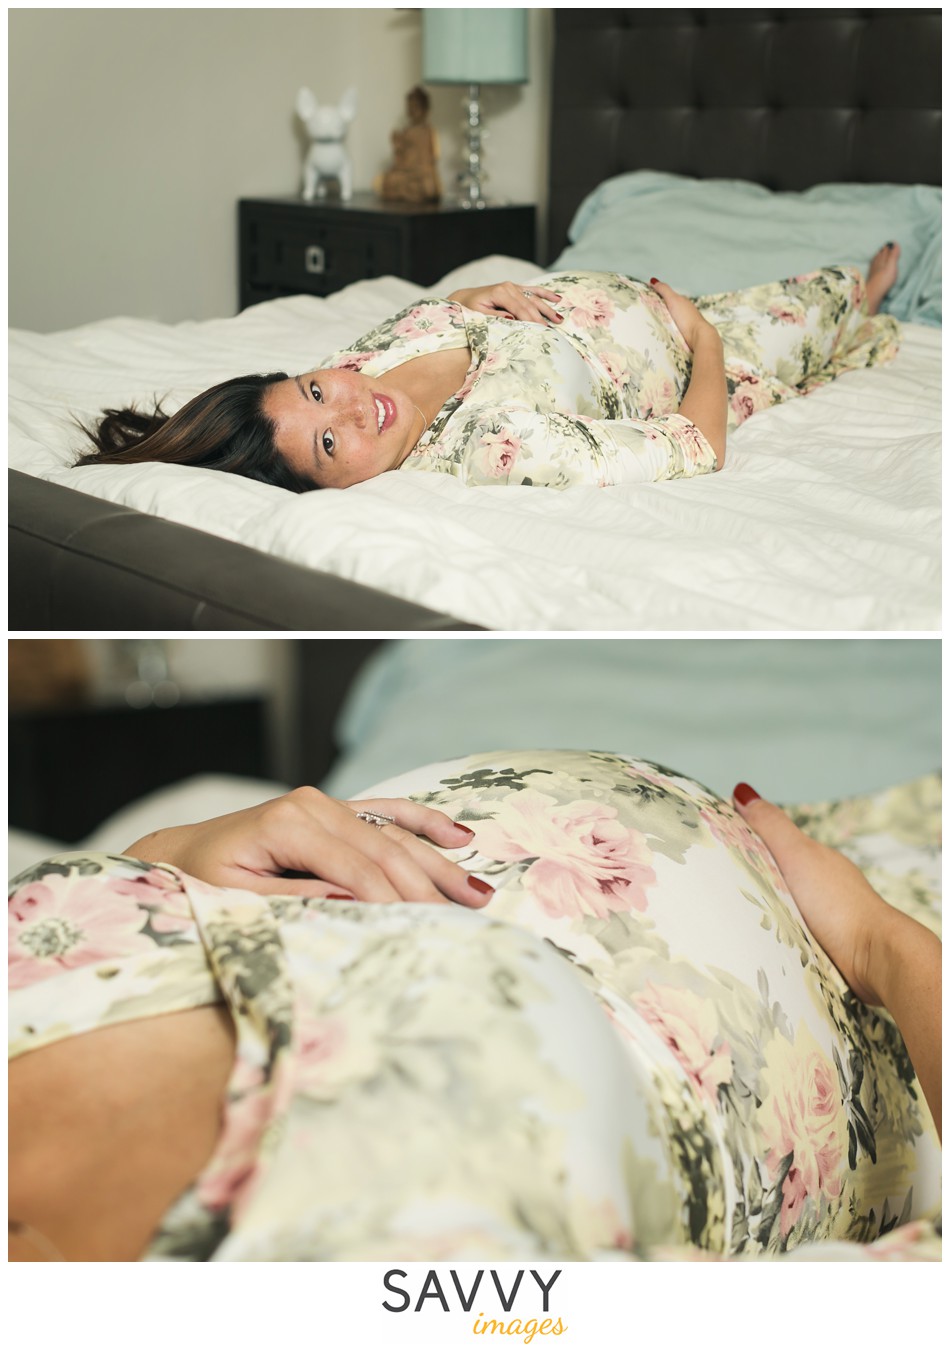 Savvy Images - Houston Maternity Photographer - Intimate maternity photos